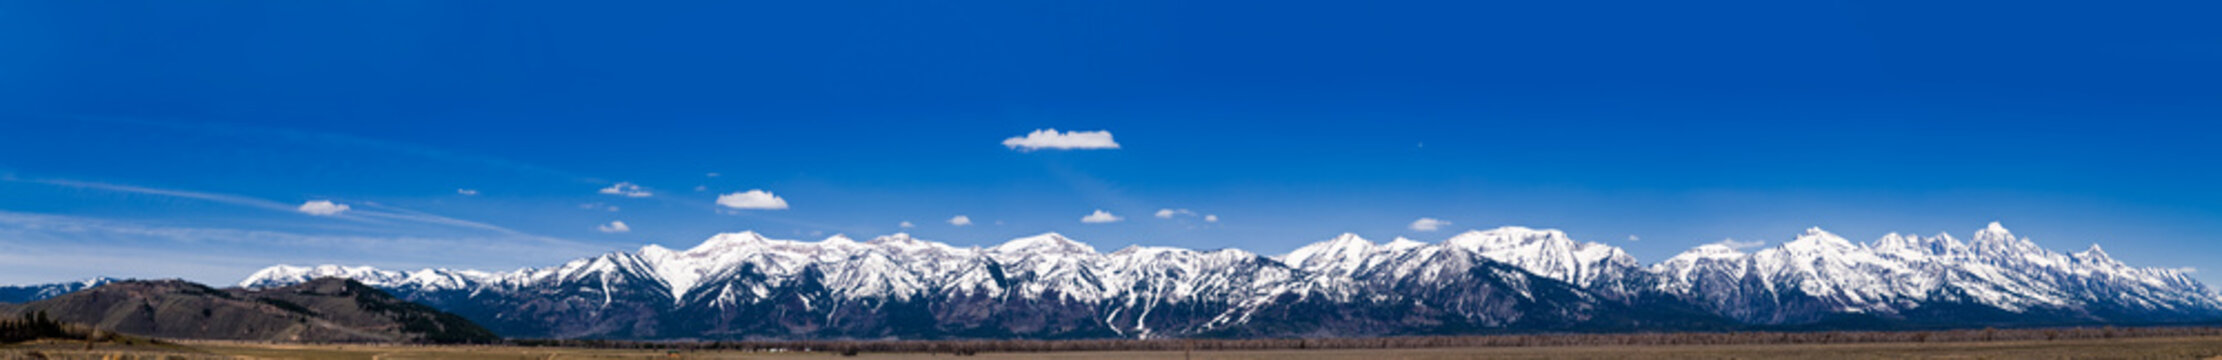 A multi photo panorama of the Grand Teton Mountain Range.